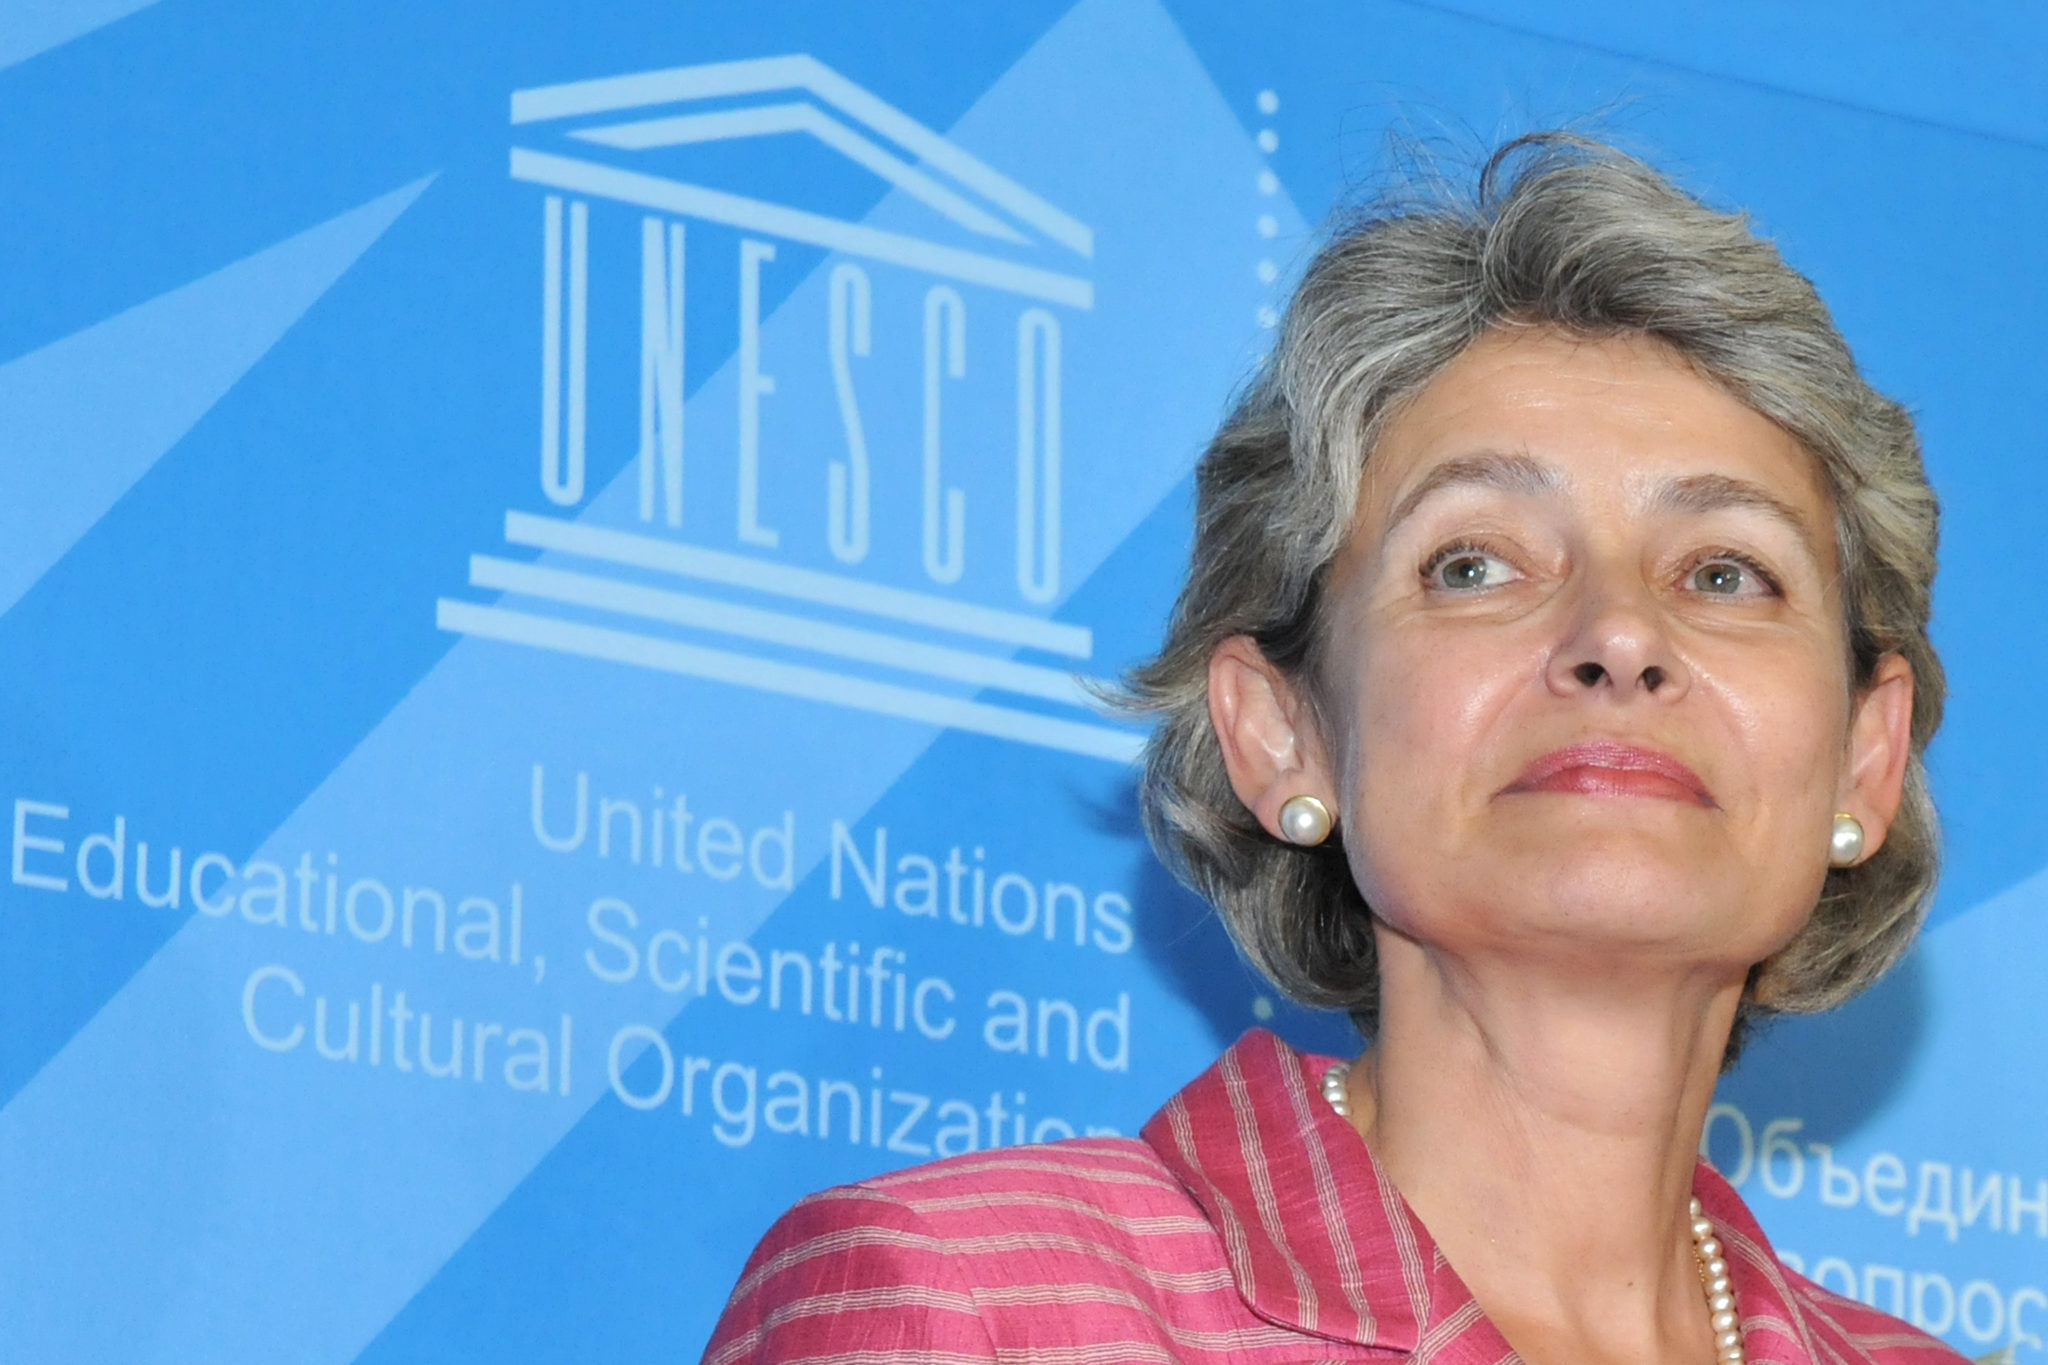 CONTENDER: Irina Bokova, the UNESCO Director General